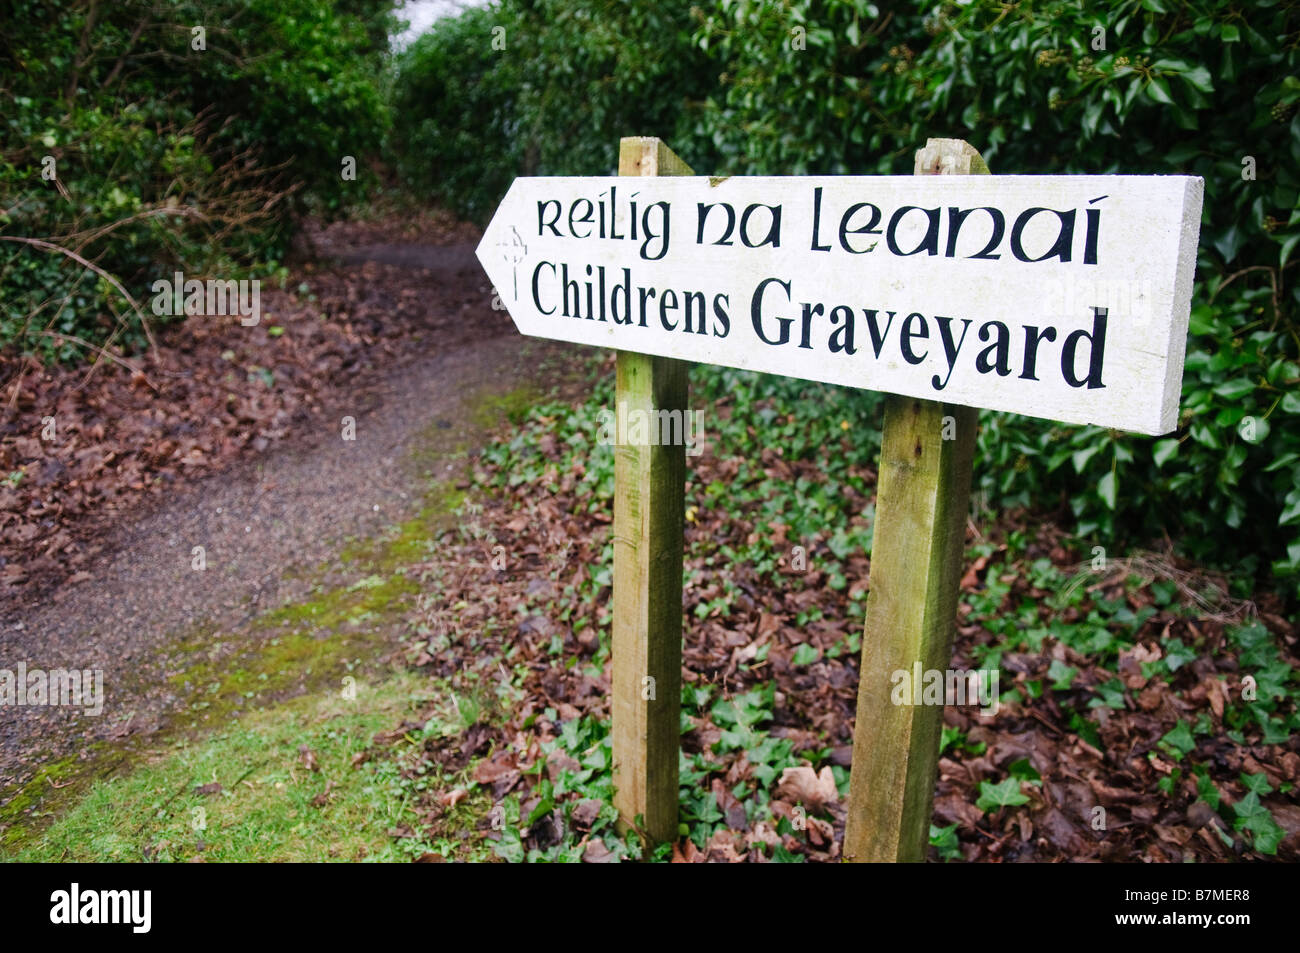 Direction sign to an Children's Graveyard in Ireland, in English and Irish Gaelic Stock Photo